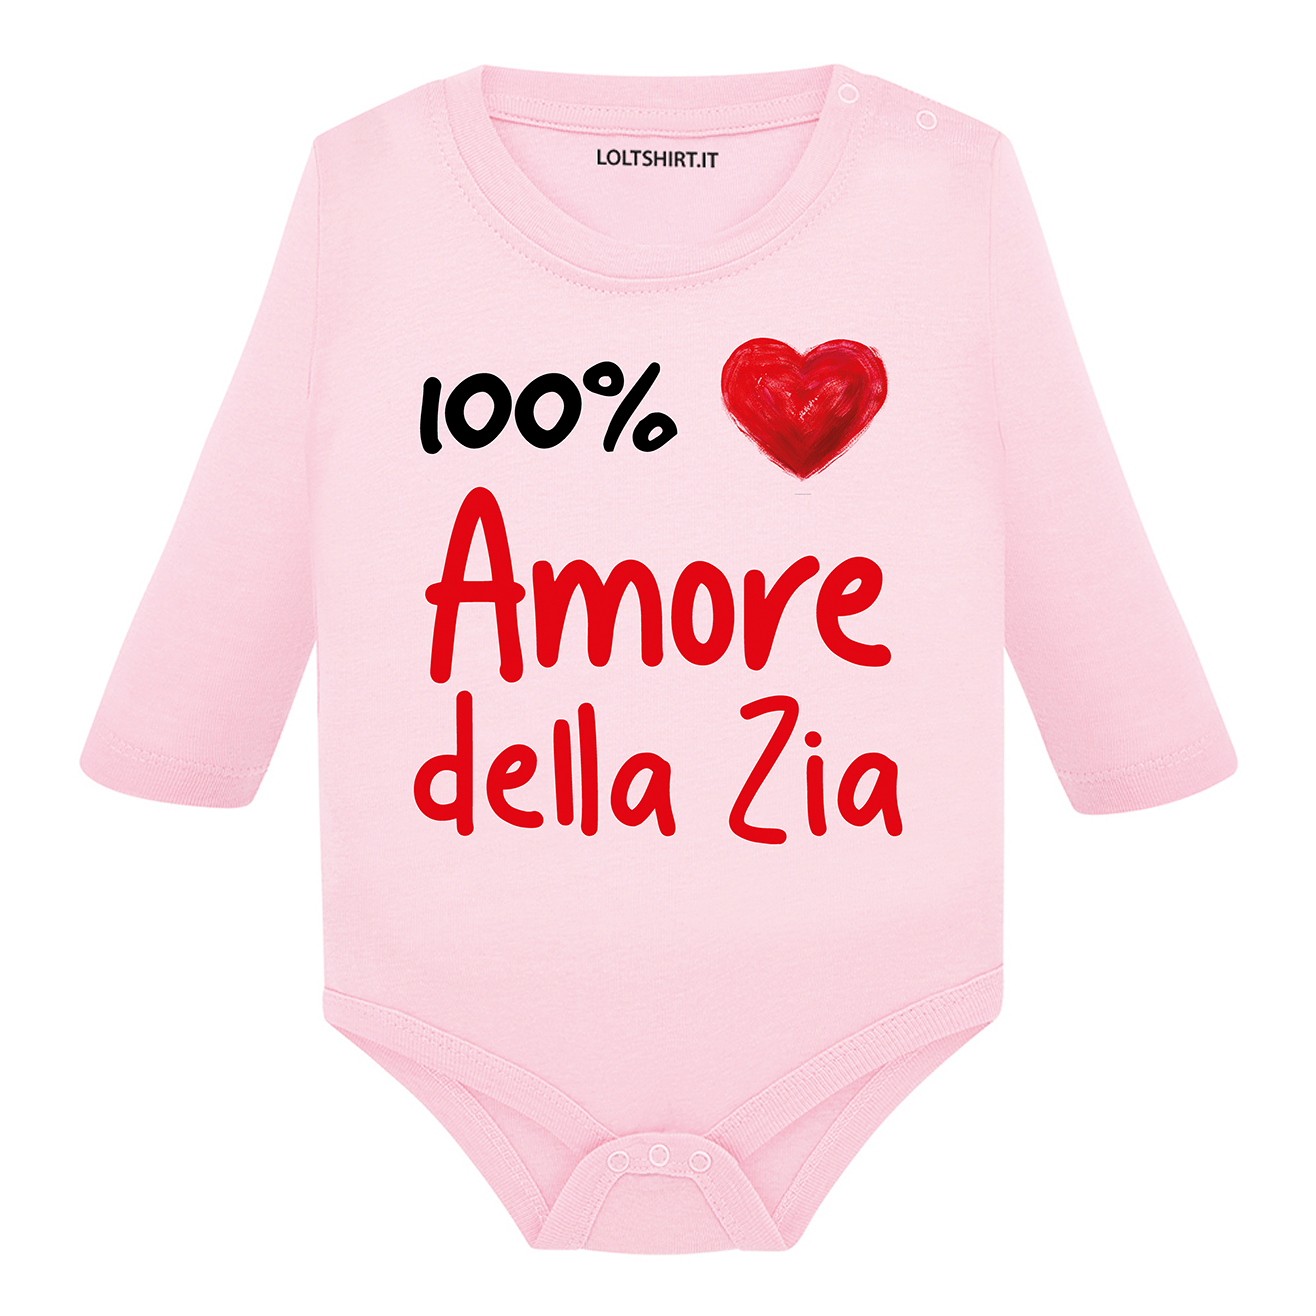 Lol T-Shirt Body per bimbi 3 mesi / Rosa 100% Amore della zia